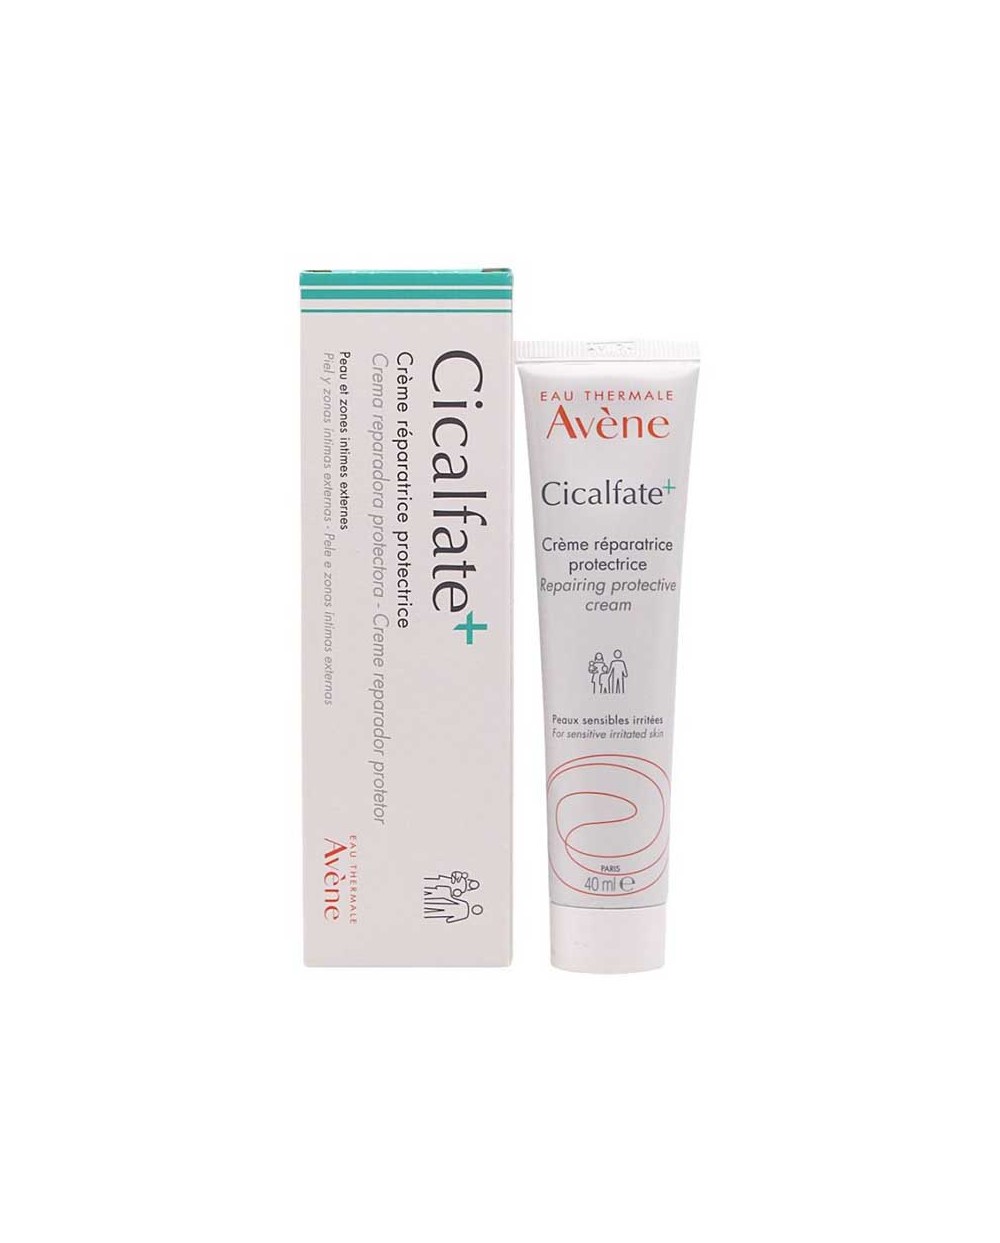 Cicalfate+ Avène crema reparadora piel y zonas íntimas externas – 40 ml.